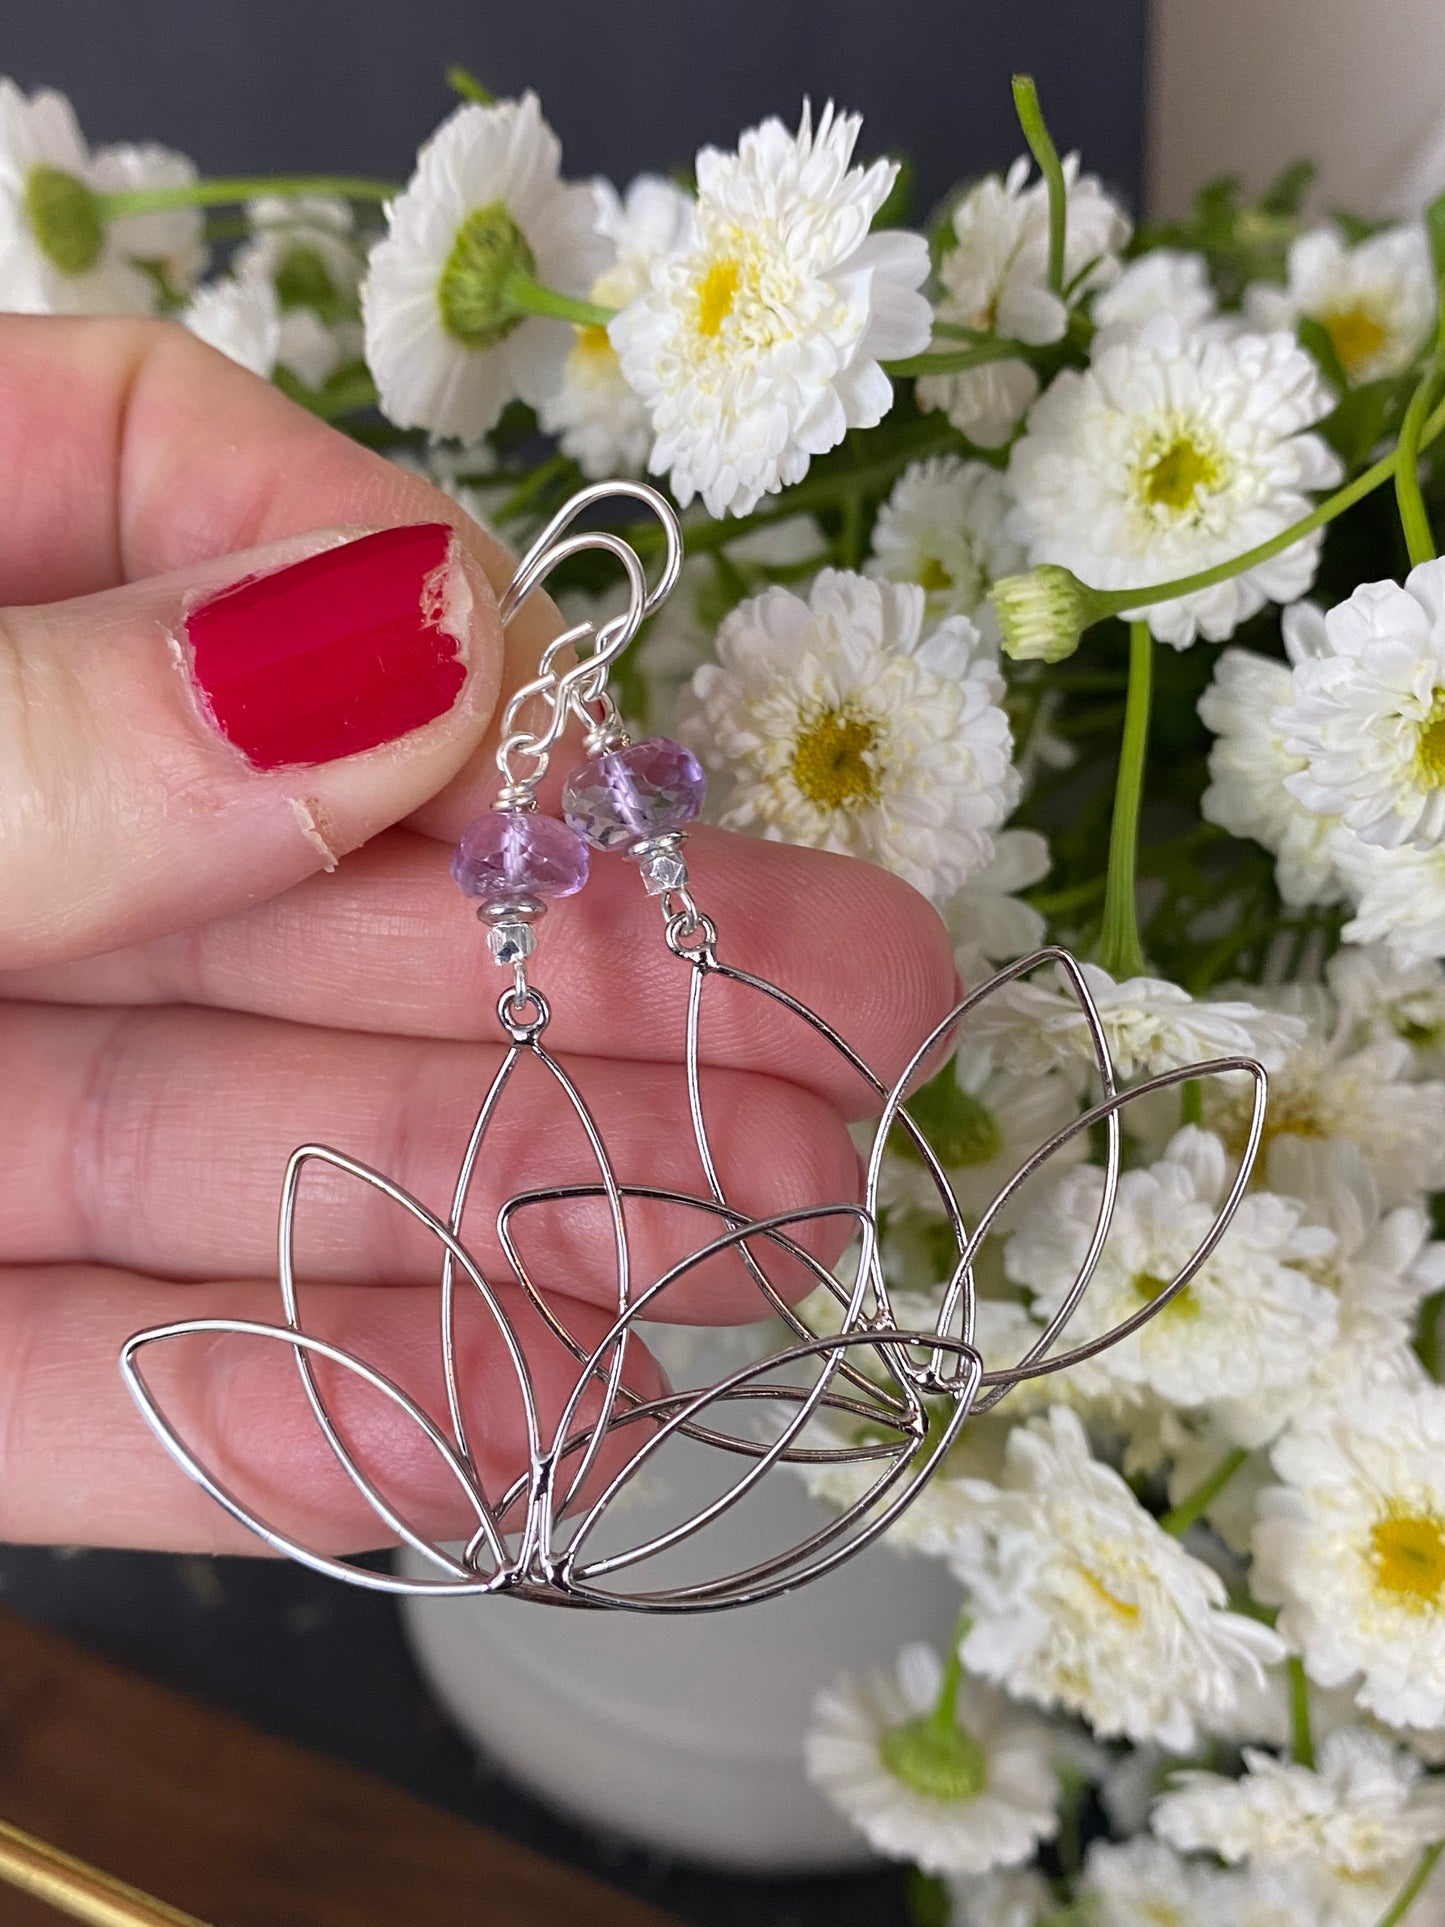 Silver lotus wire flower charms, amethyst stone, earrings, jewelry.